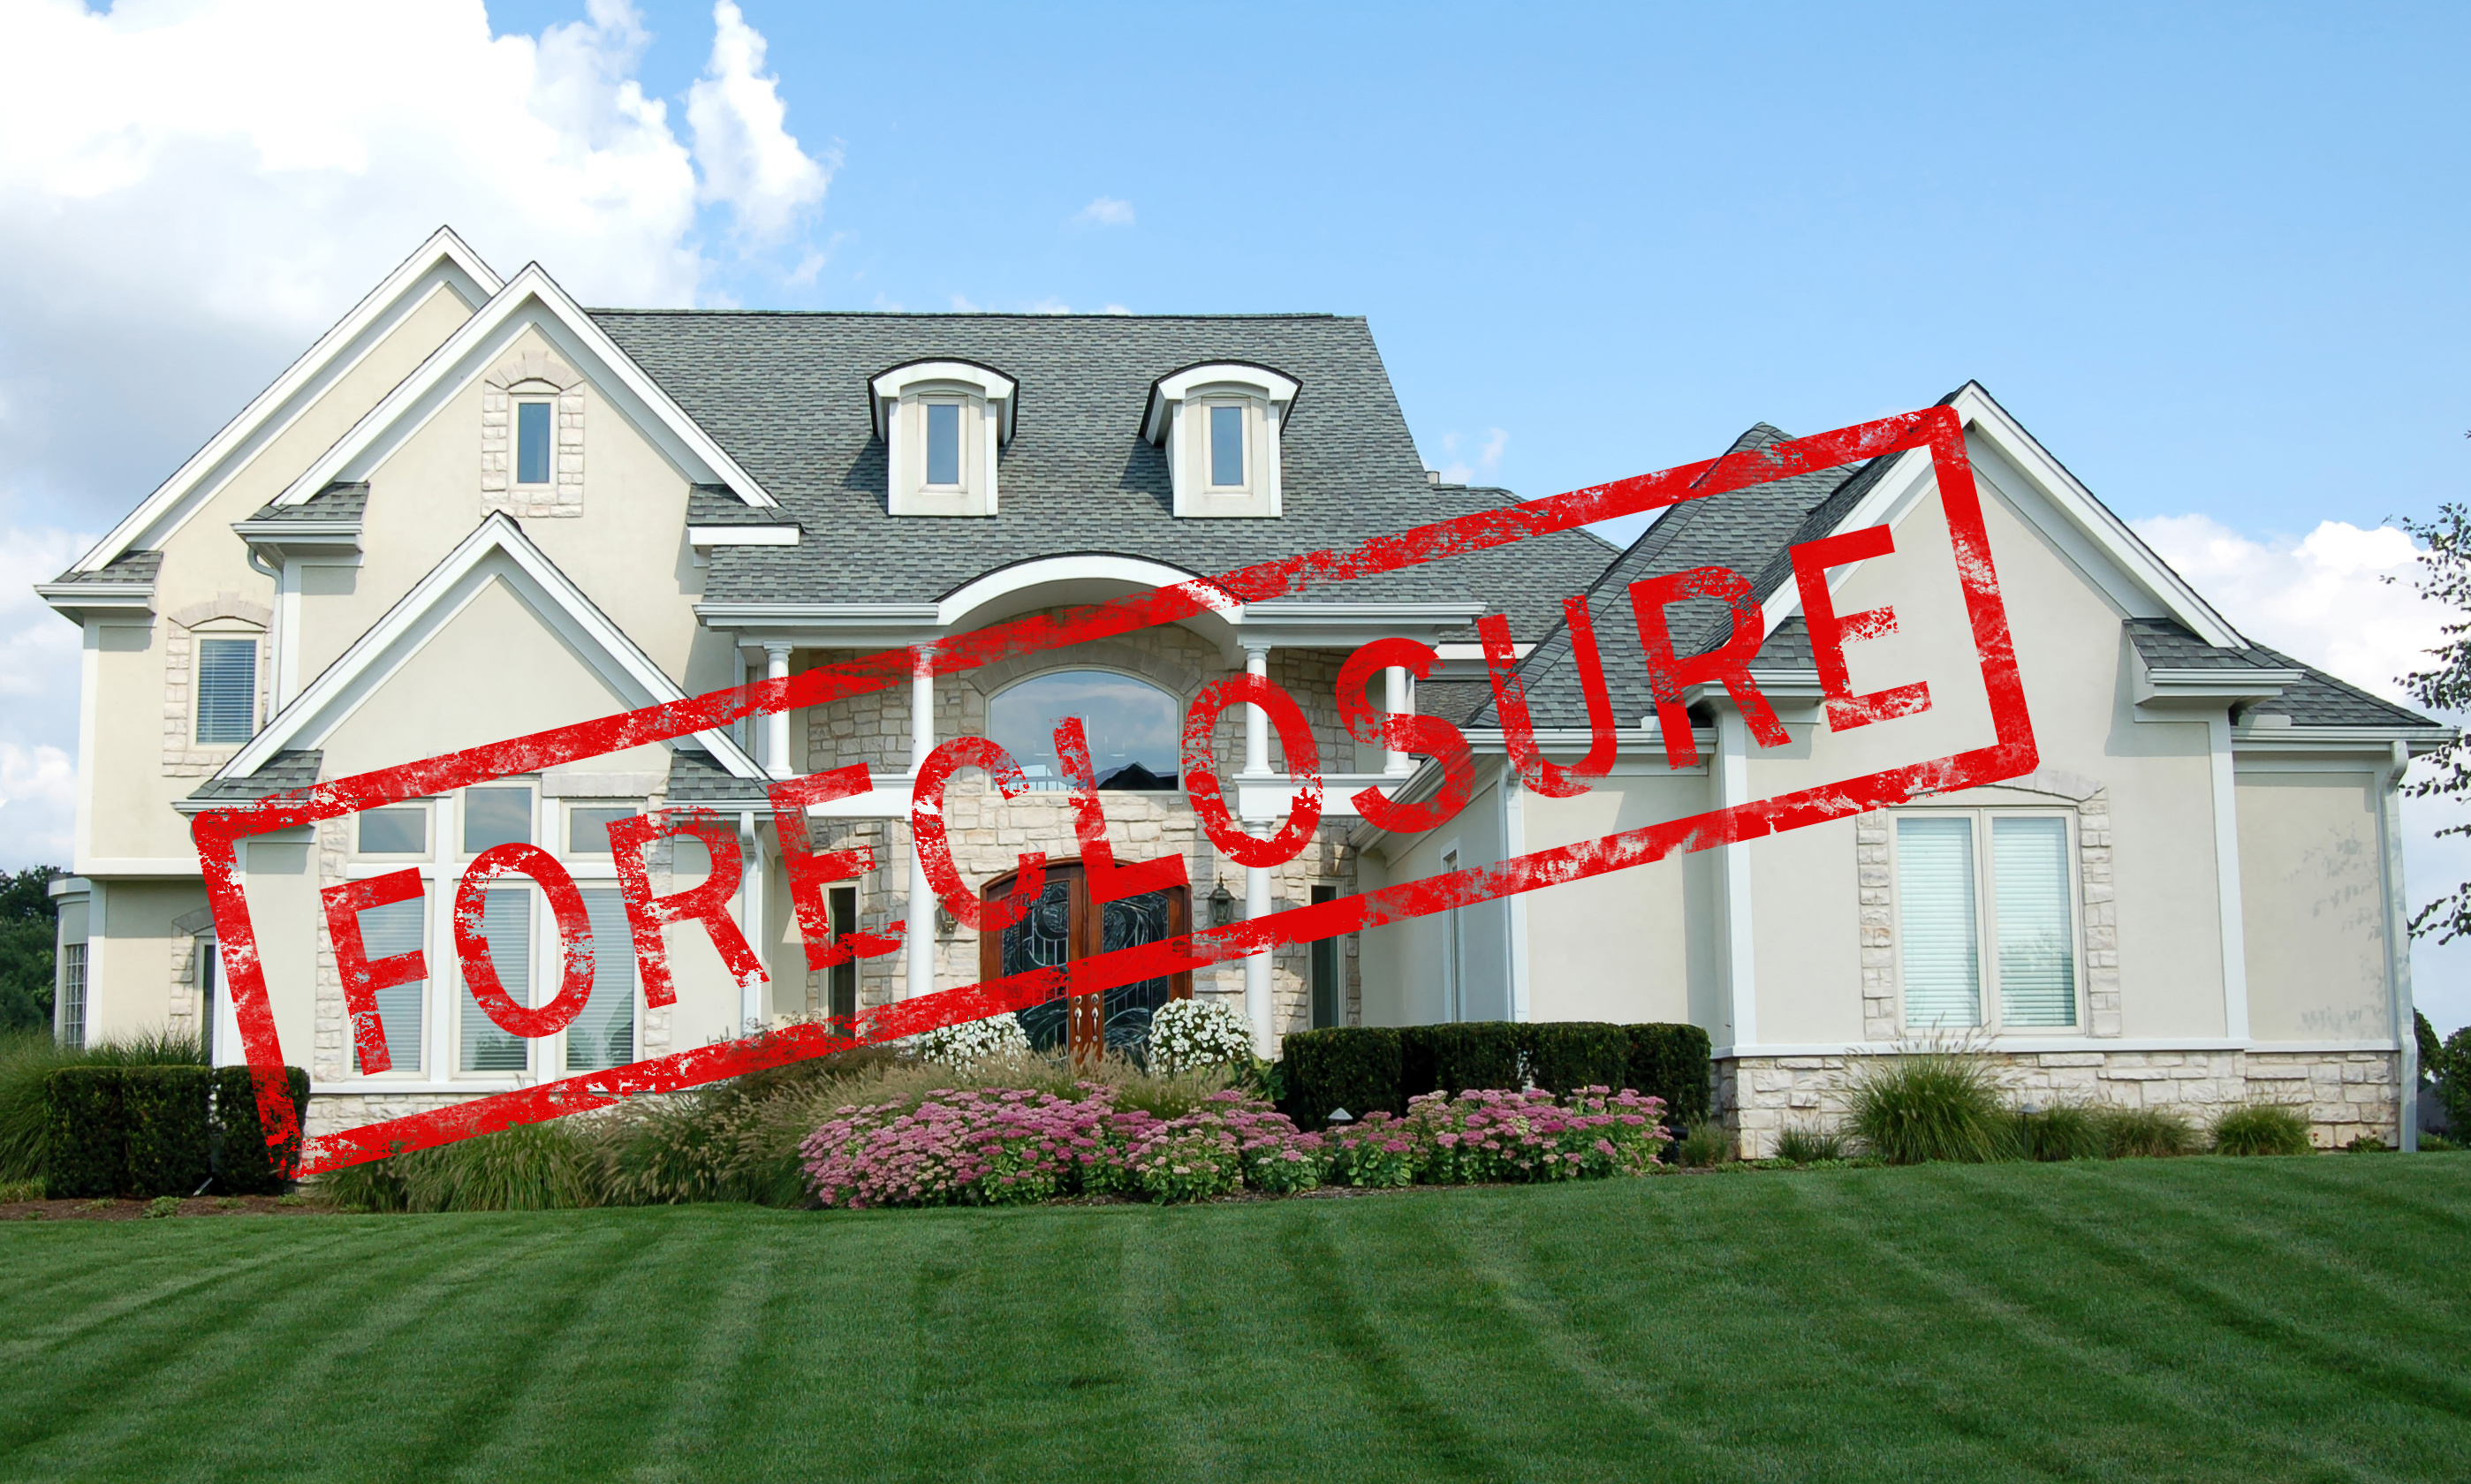 Call Appraisal Quest Co. (805) 469-3088 to order valuations regarding Ventura foreclosures